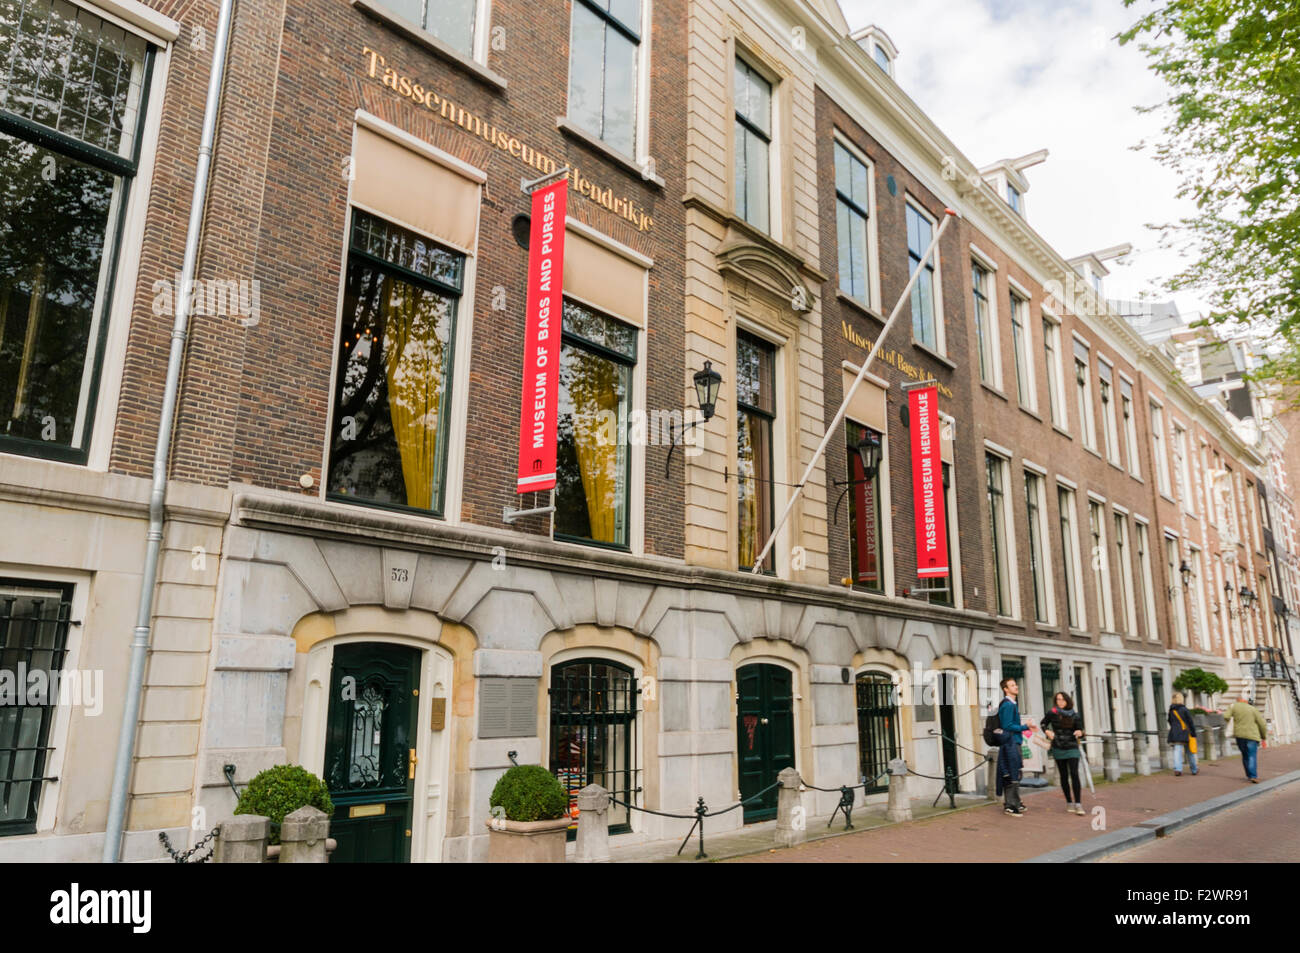 Tassenmuseum Hendrikje, museum of bags and purses, Amsterdam Stock Photo -  Alamy